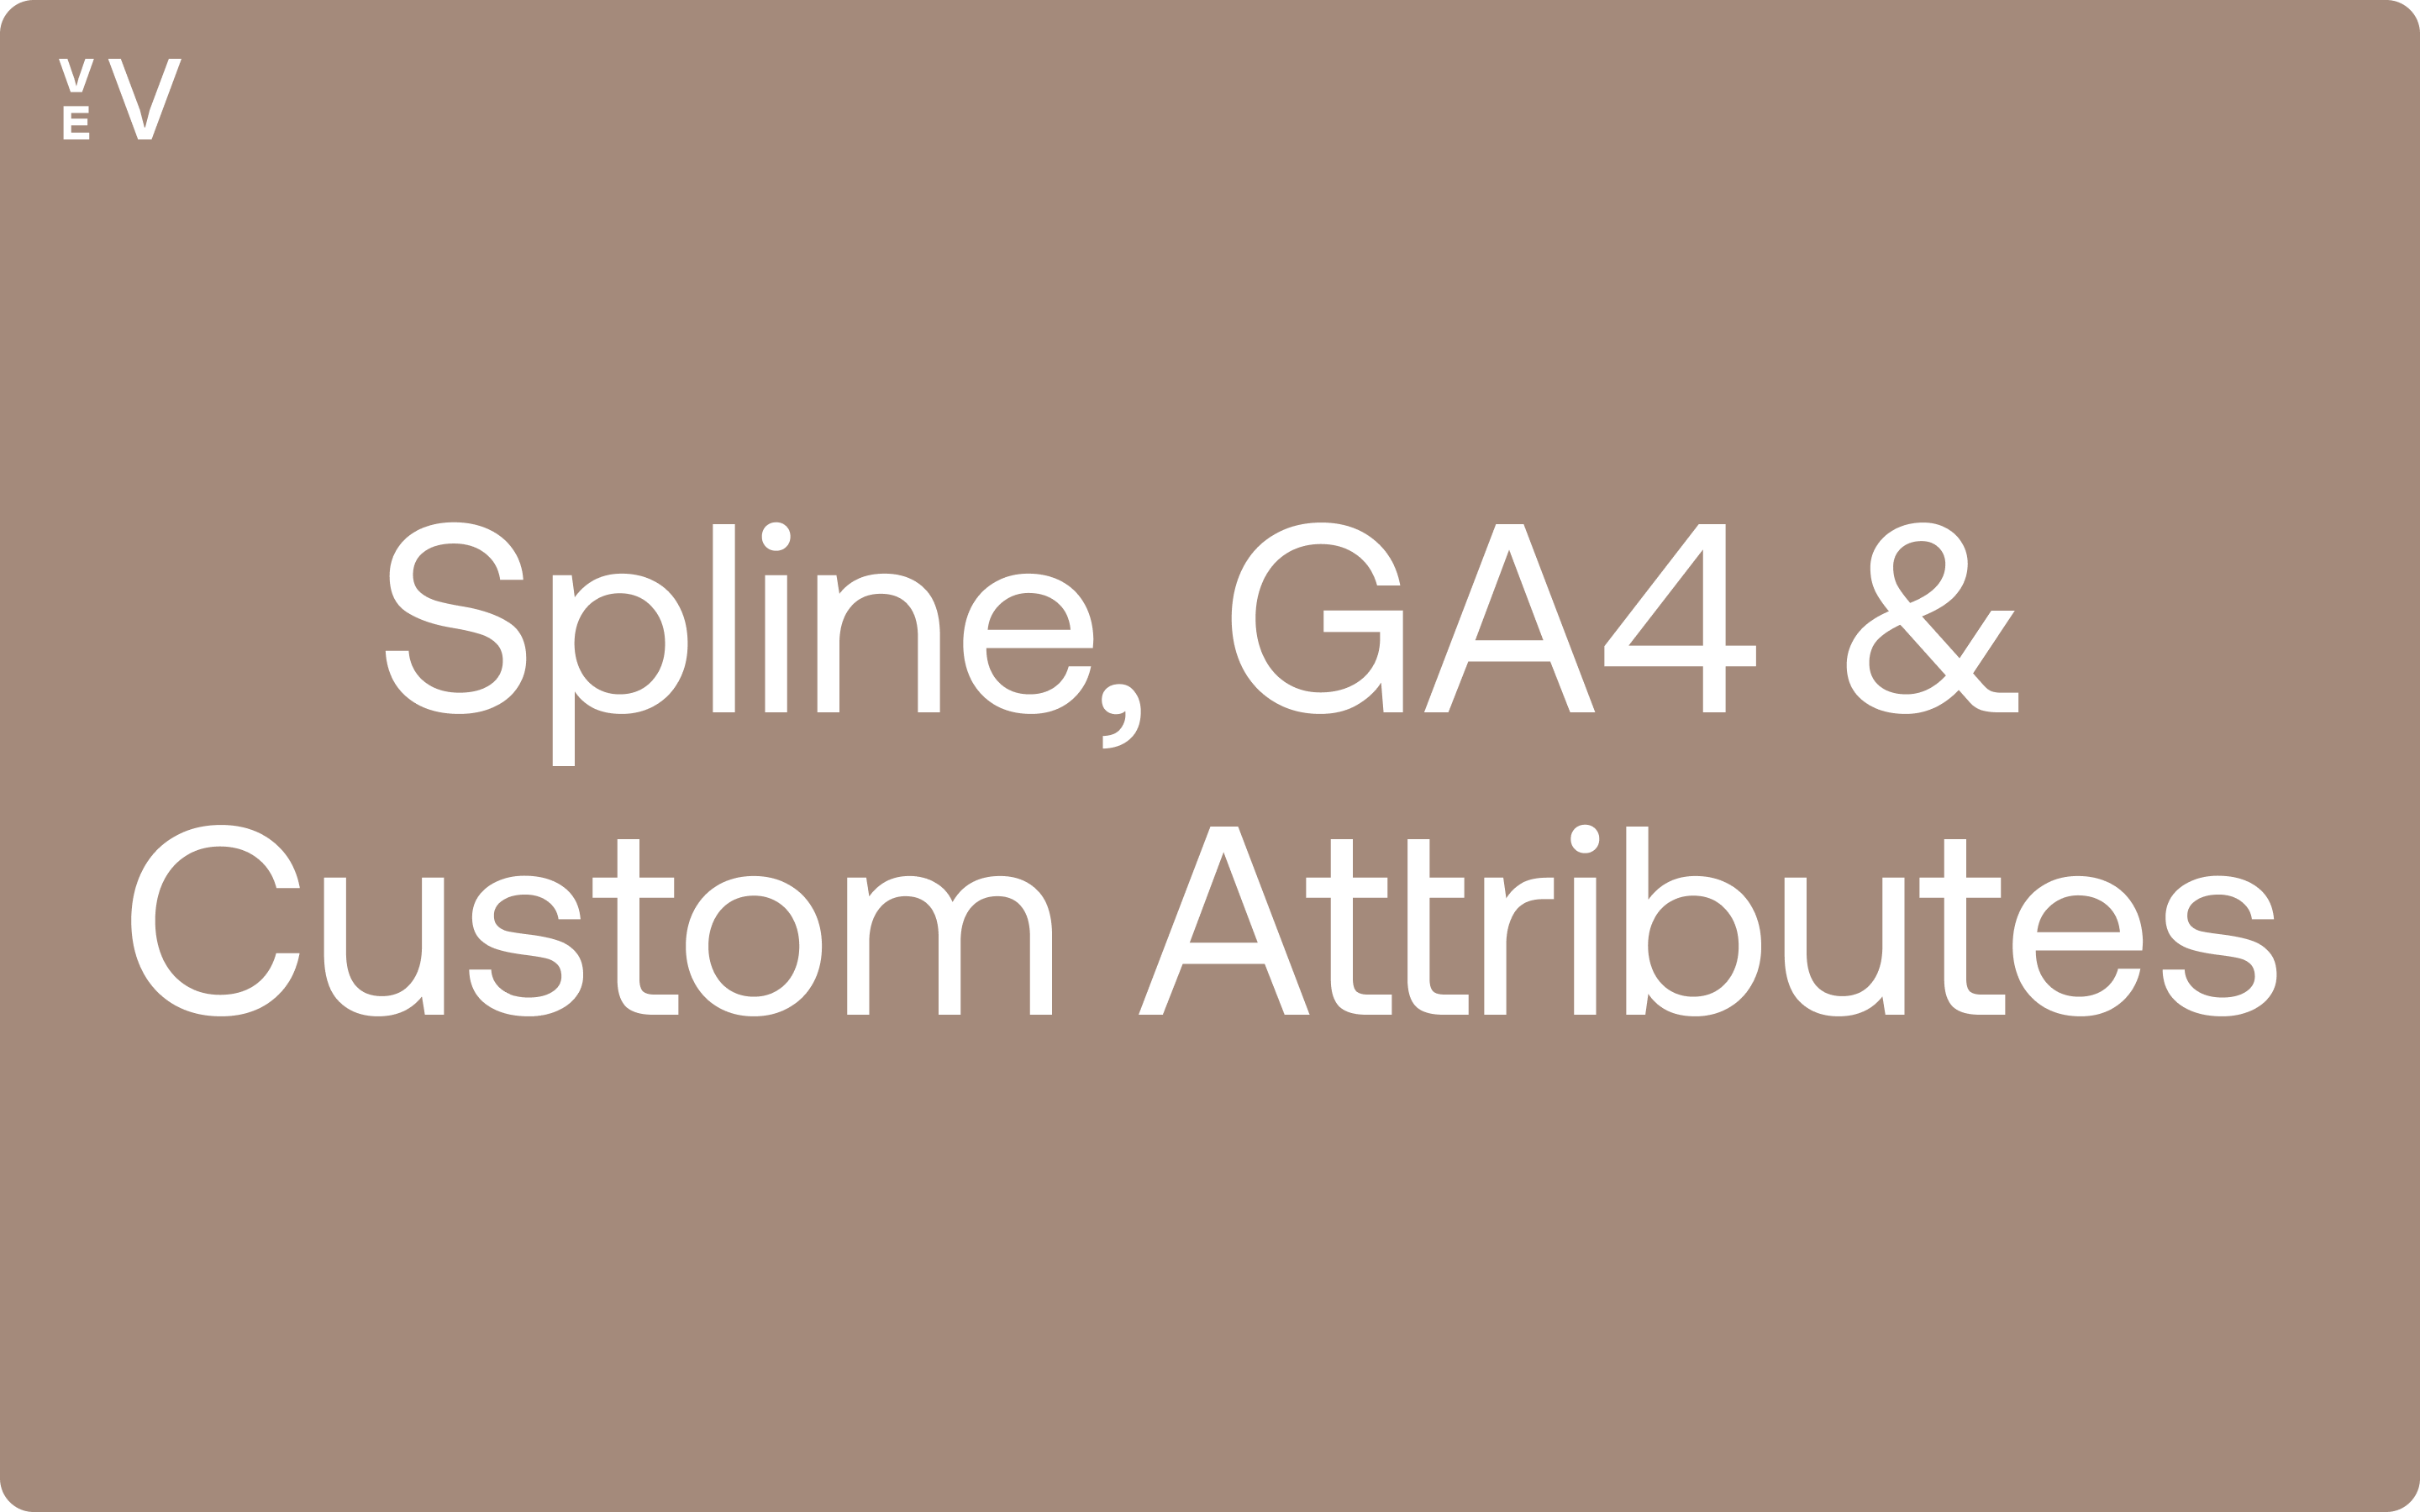 What's New: Spline, GA4 & Custom Attributes